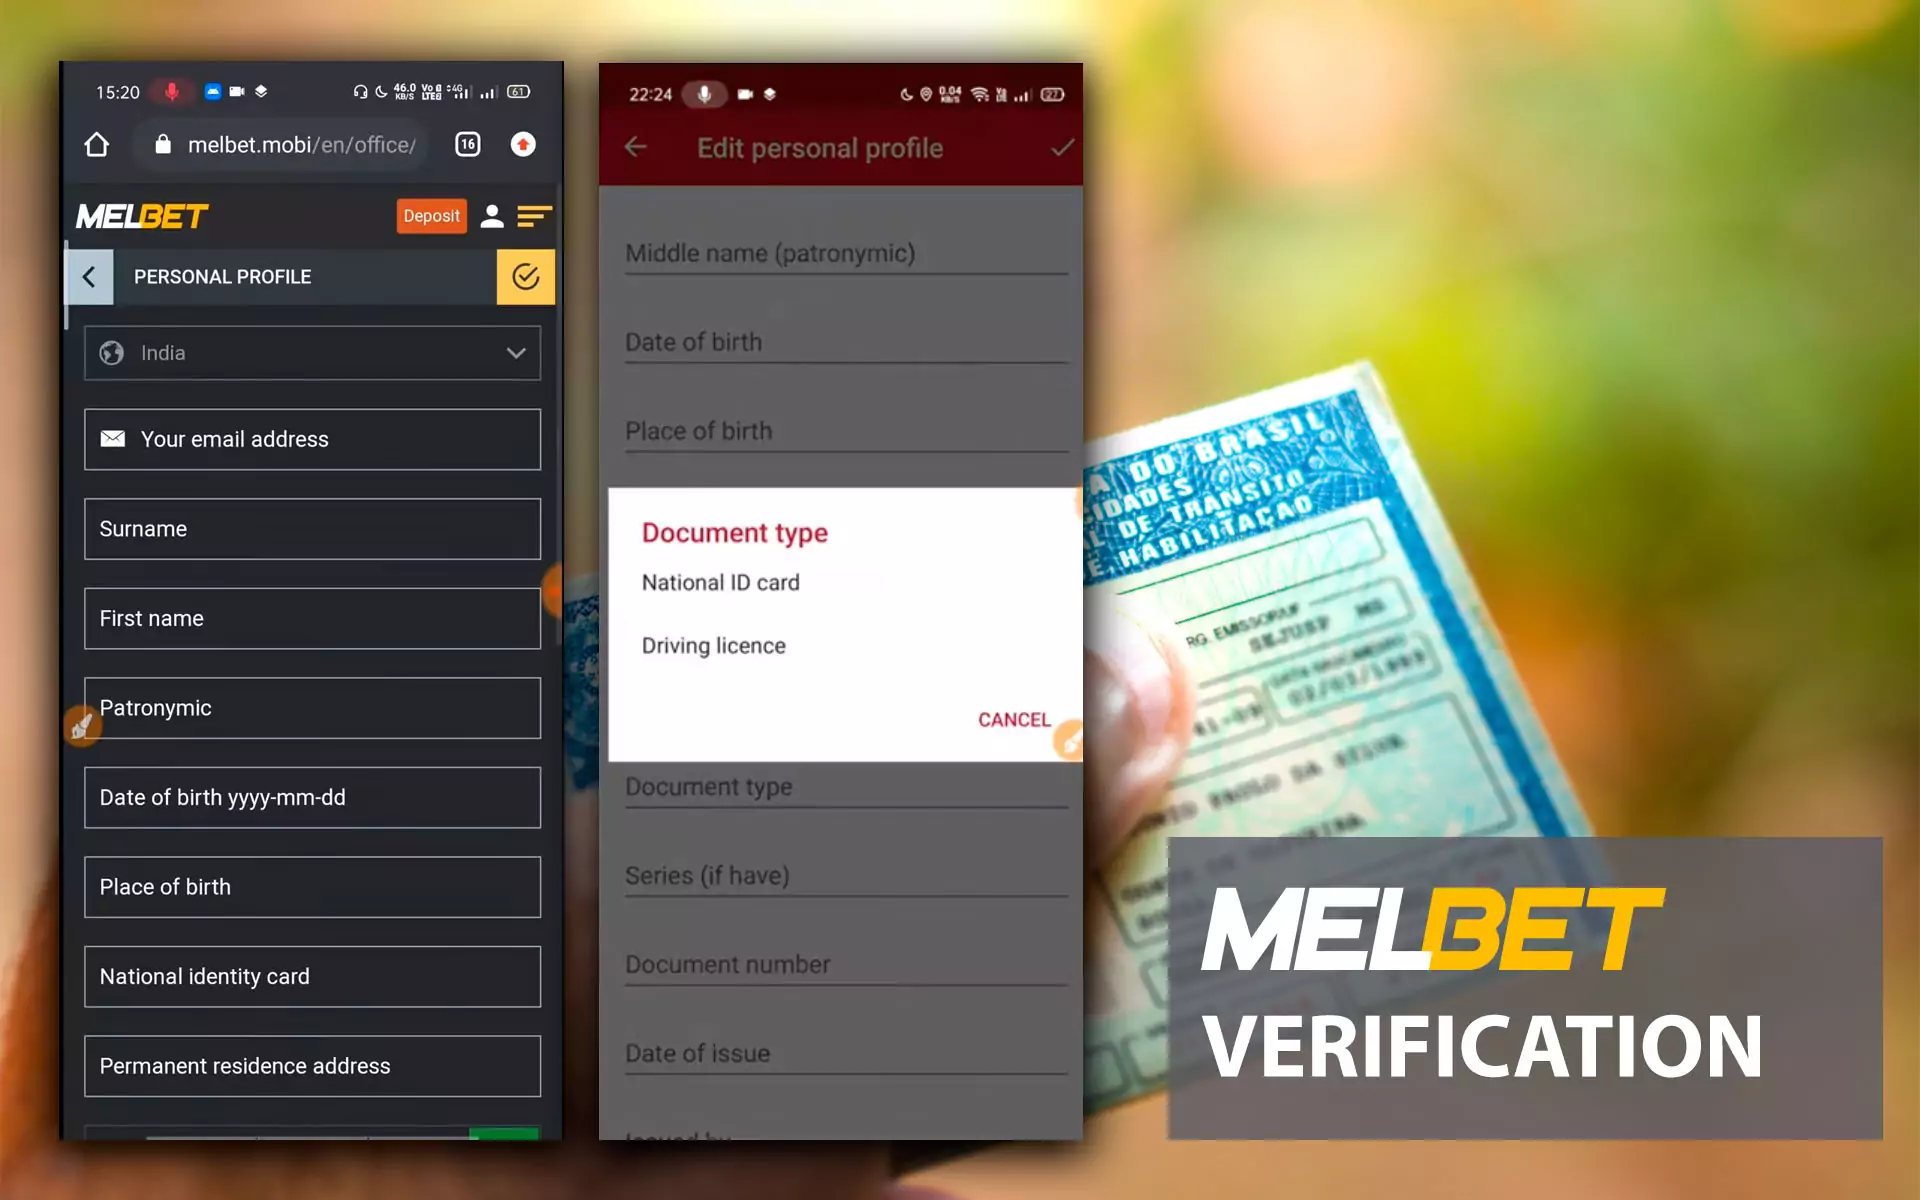 The verification process at Melbet Brazil.